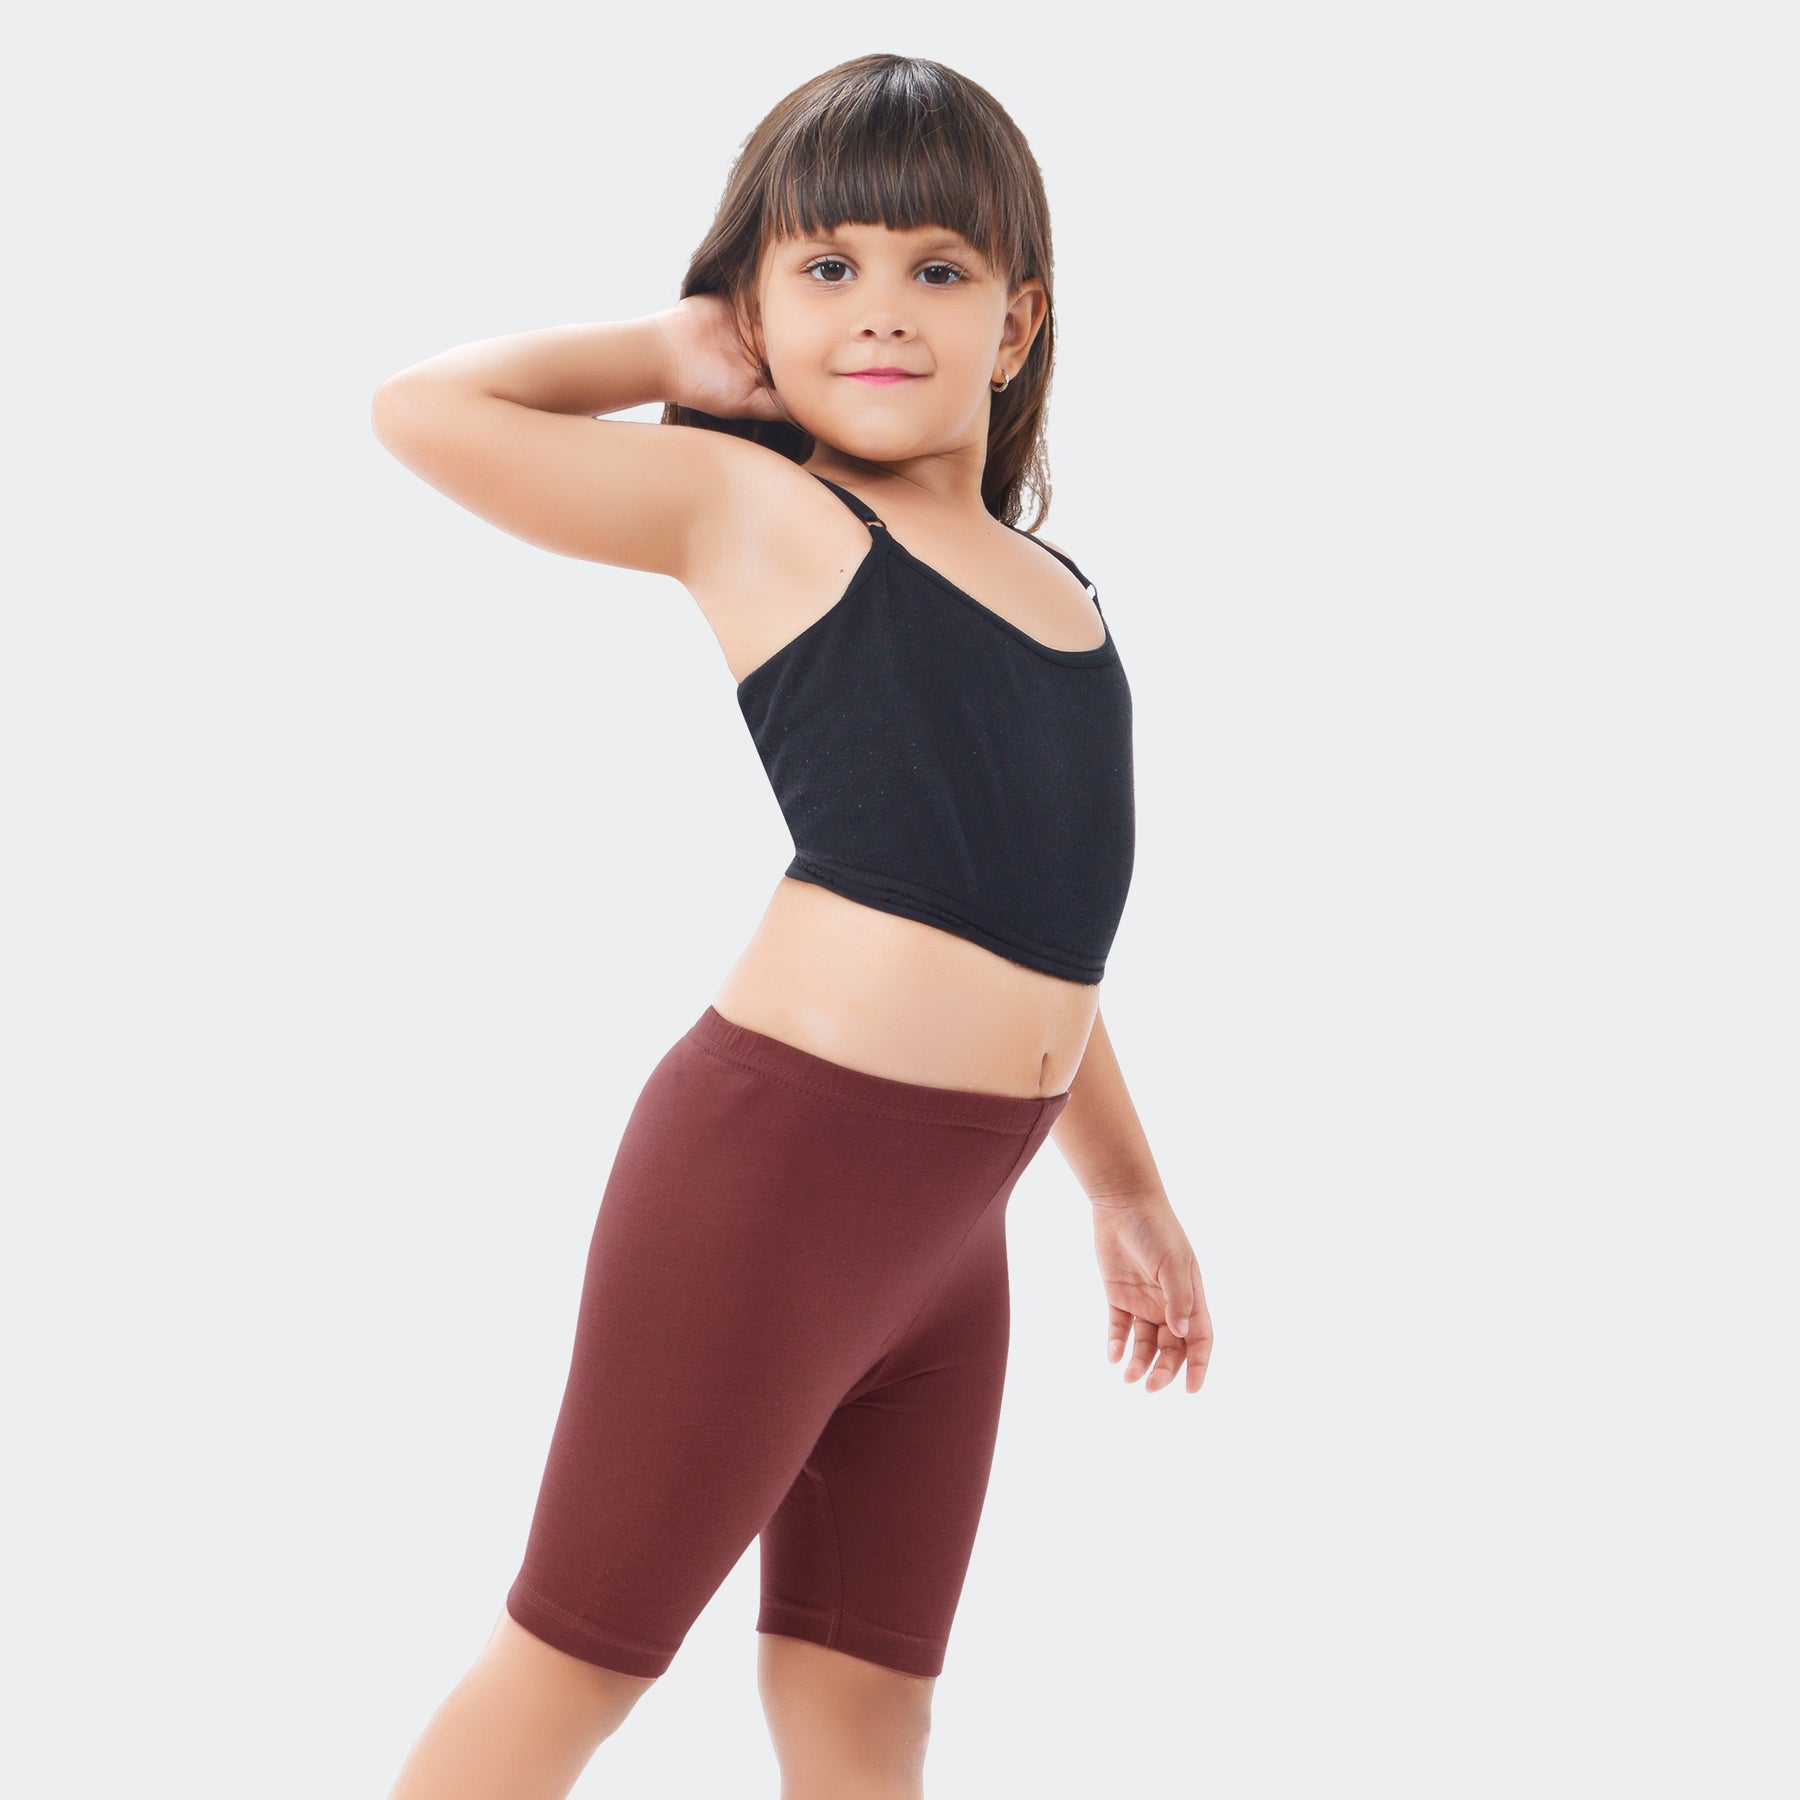  Girls Yoga Shorts Kid Yoga Dance Shorts Youth Athletic  Gymnastics Bike Cheer Shorts Children Hot Pants Yoga Gym Shorts Pink:  Clothing, Shoes & Jewelry